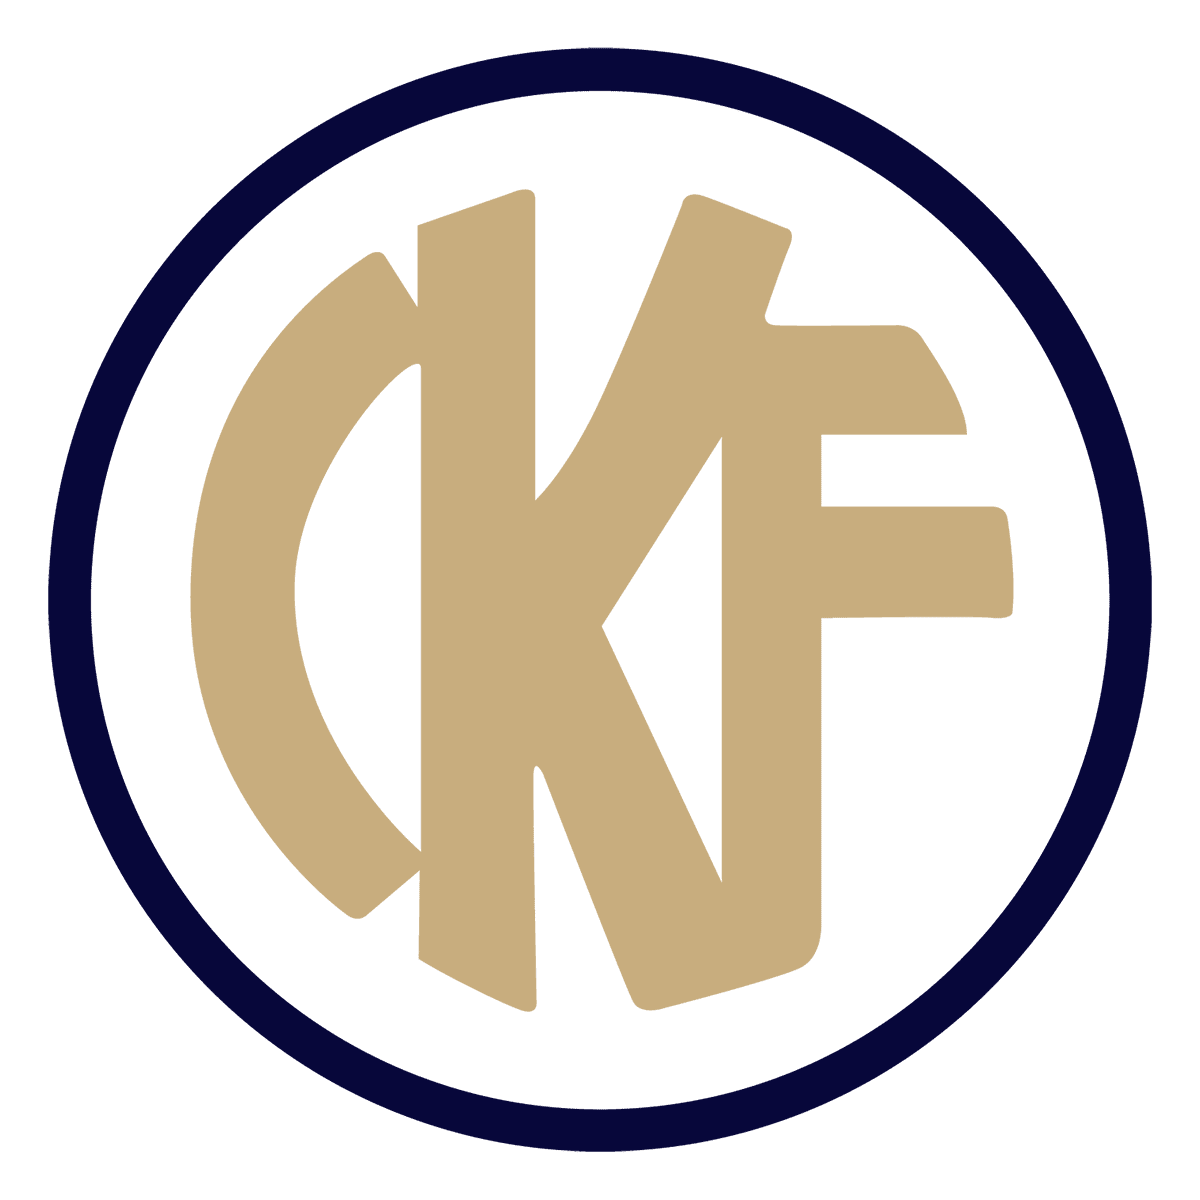 ckf logo